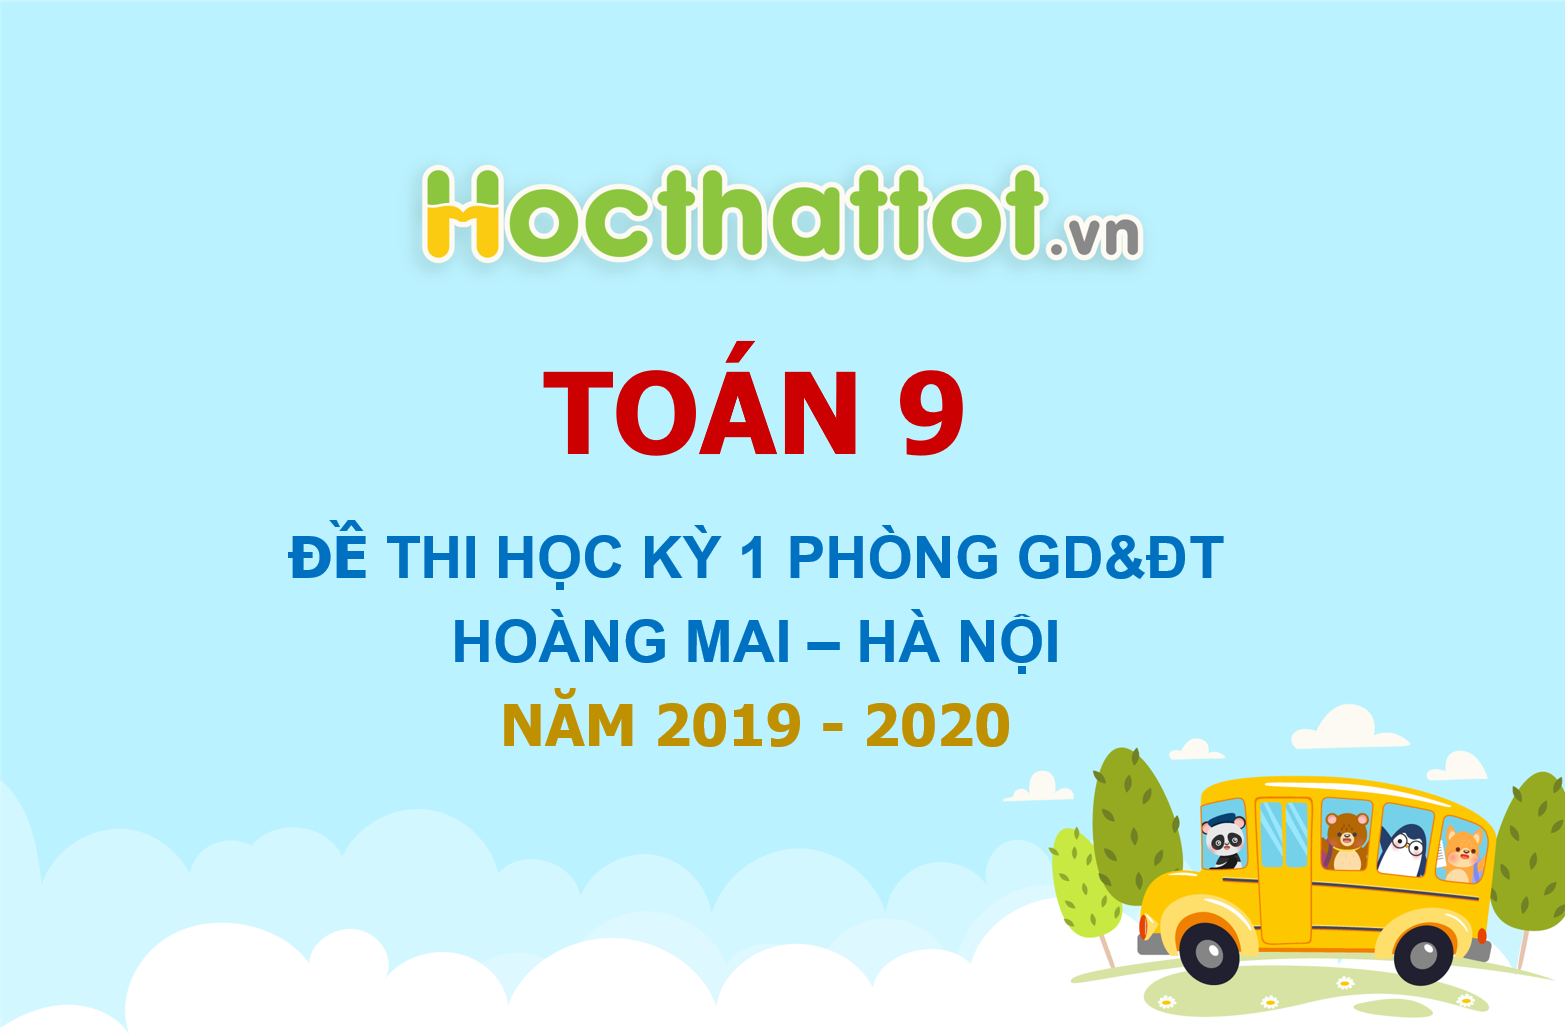 de-thi-hoc-ky-1-toan-9-nam-2019-2020-phong-gddt-hoang-mai-ha-noi